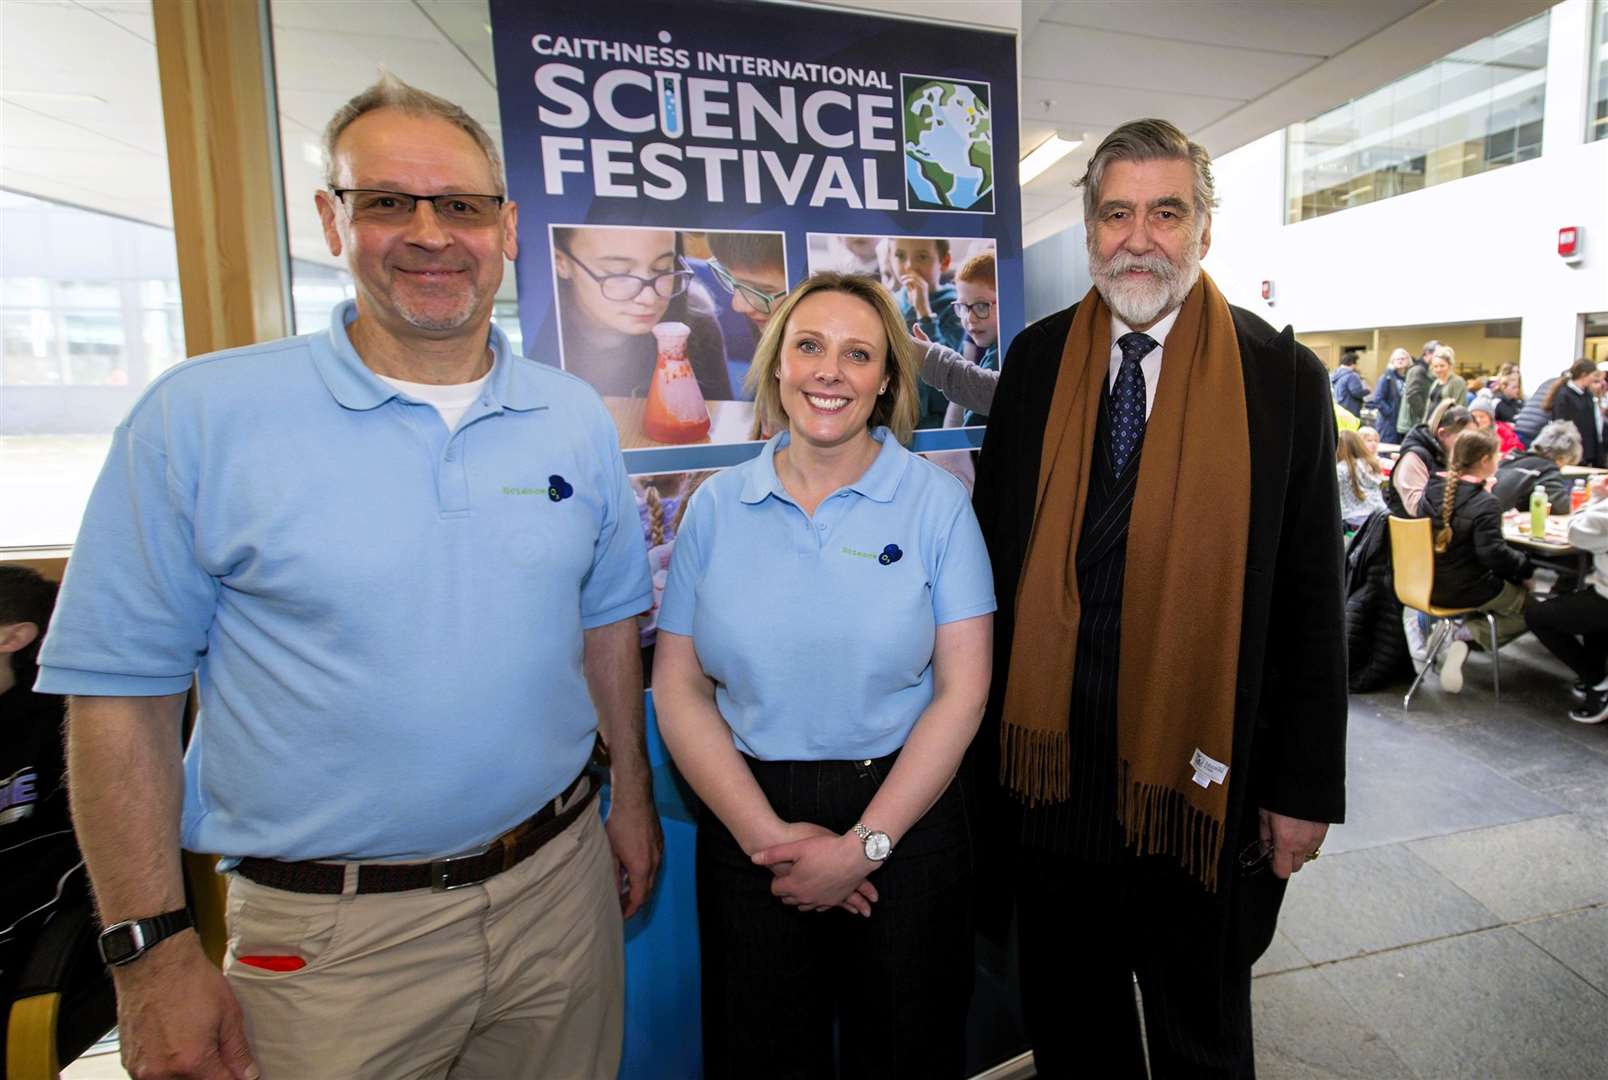 From left, Caithness International Science Festival chairman Professor Iain Baikie,coordinator Nicola Macleod and patron Lord Thurso. Photo: Robert MacDonald/Northern Studios